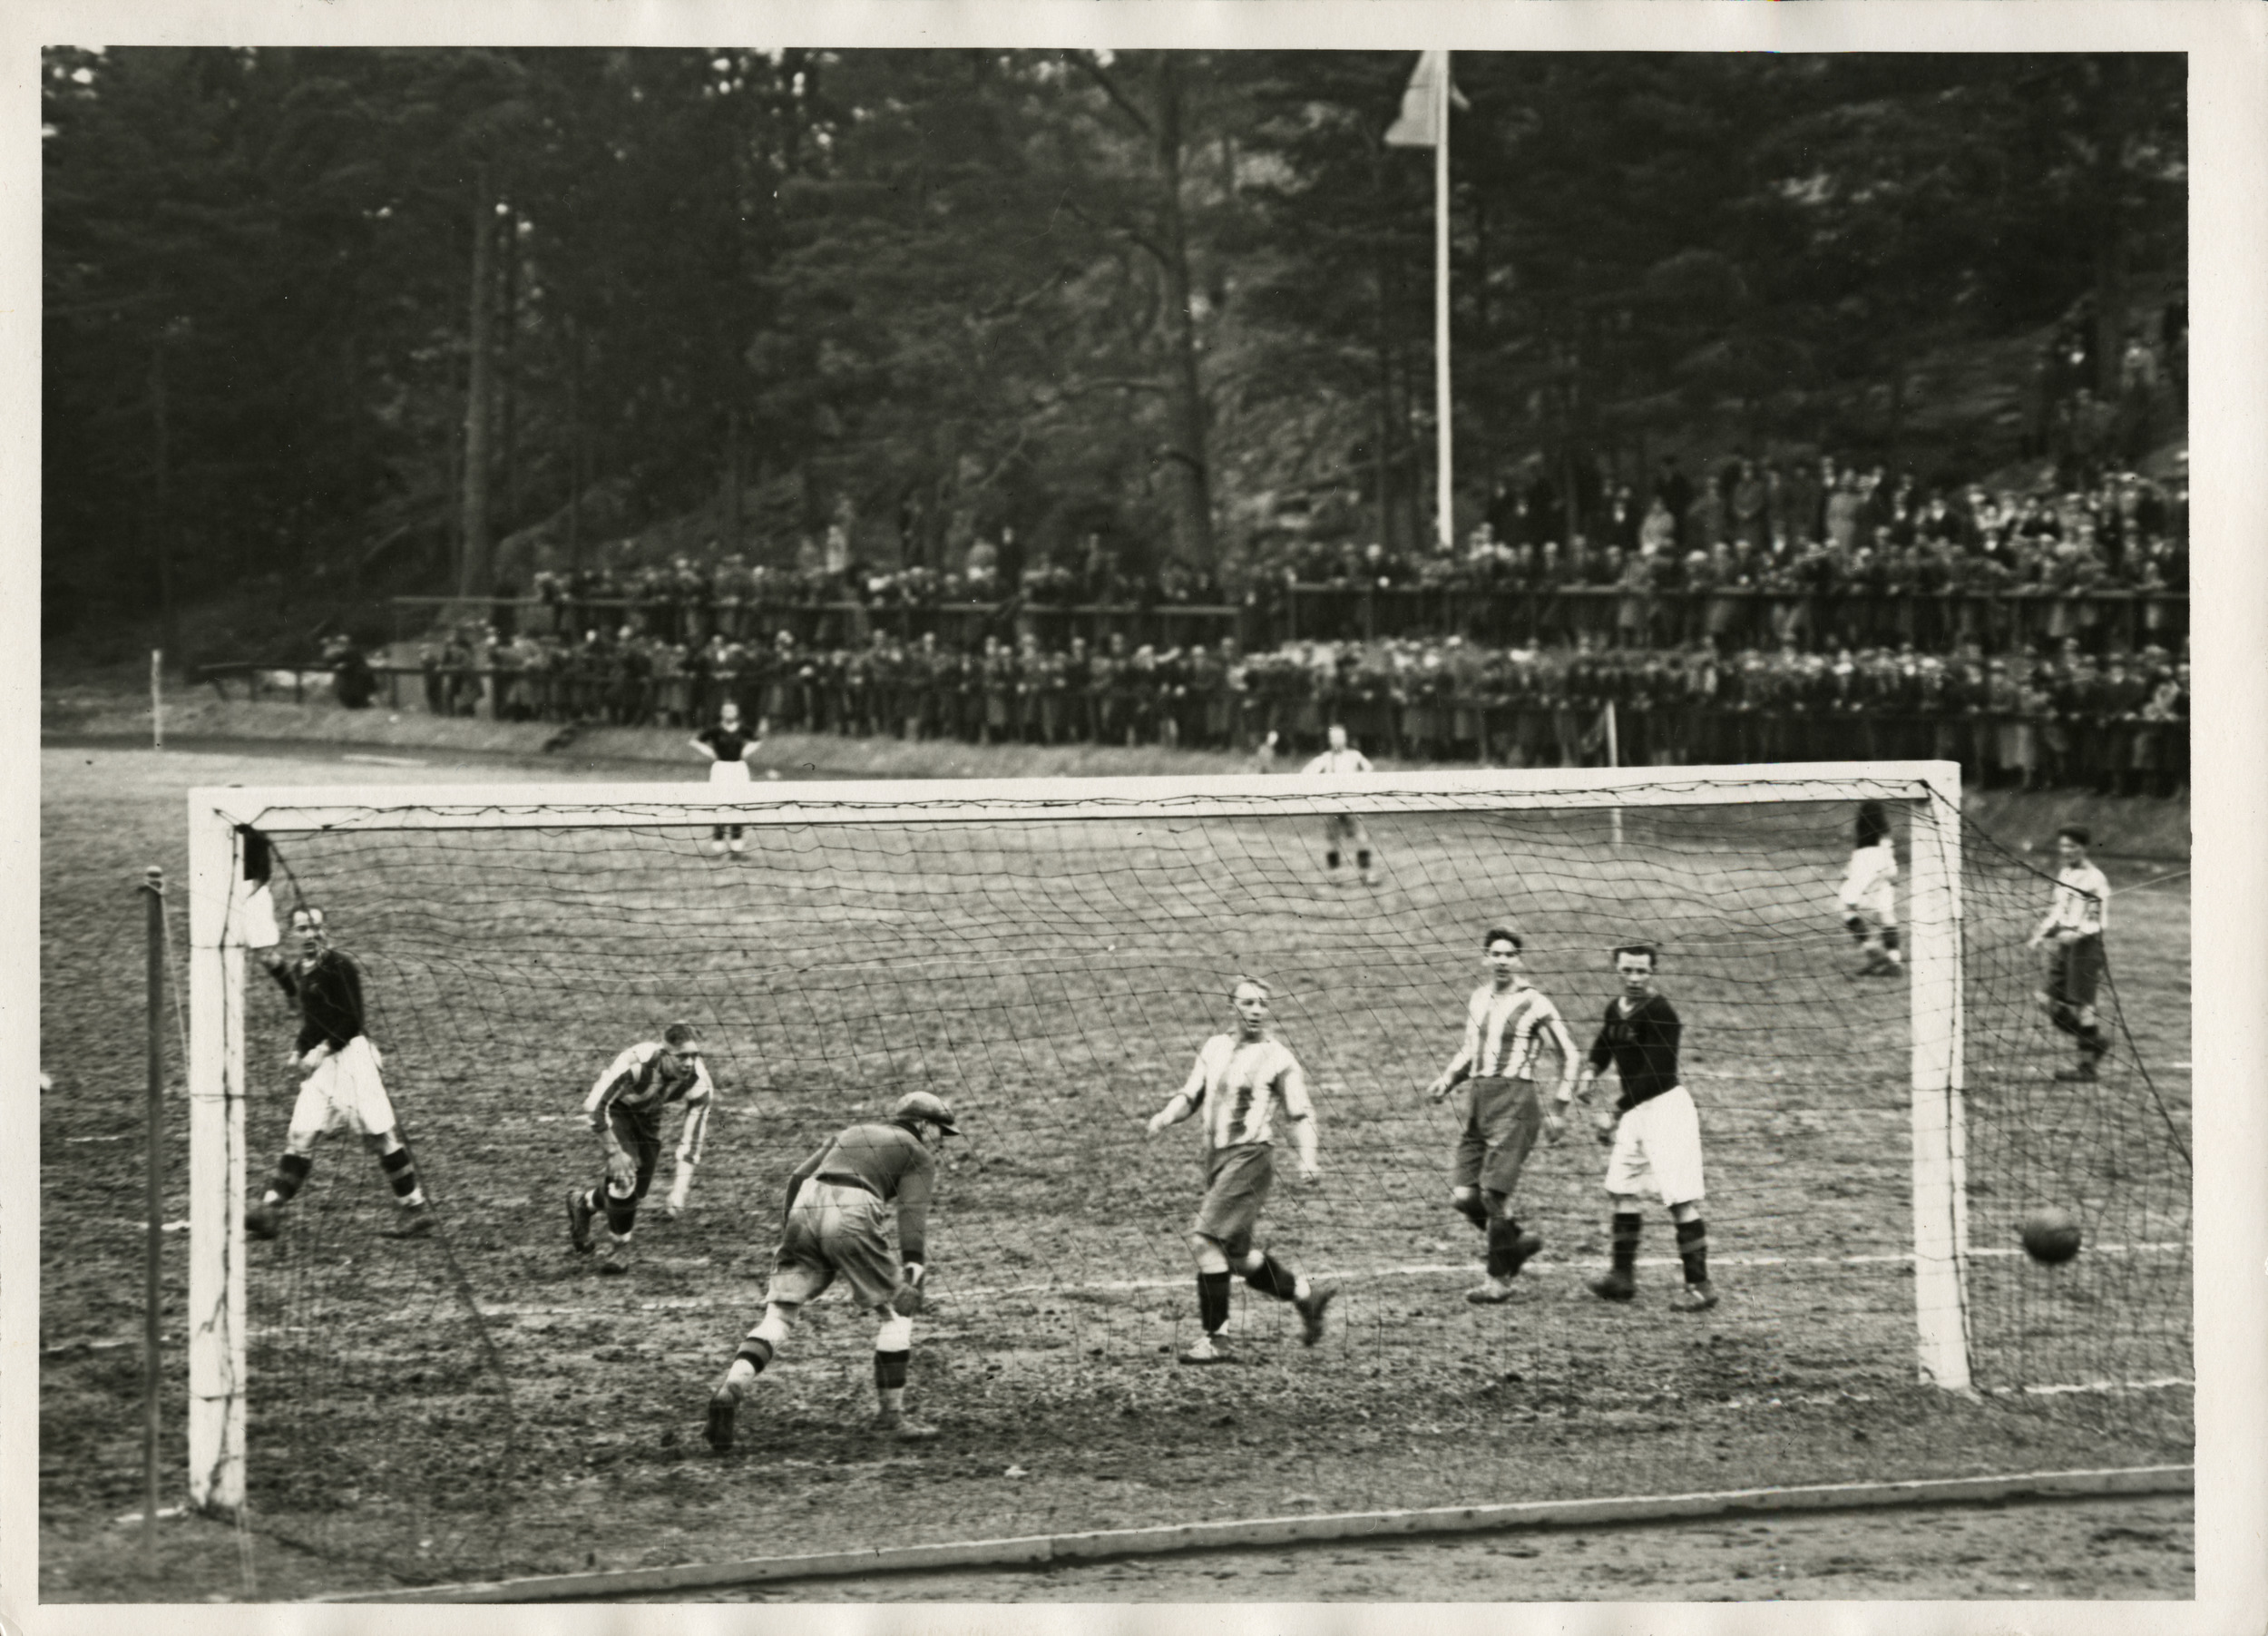 Wednesday 24 August 1932  Sundbybergs IK - AIK 3-2 ()  Okänd arena, Okänd ort